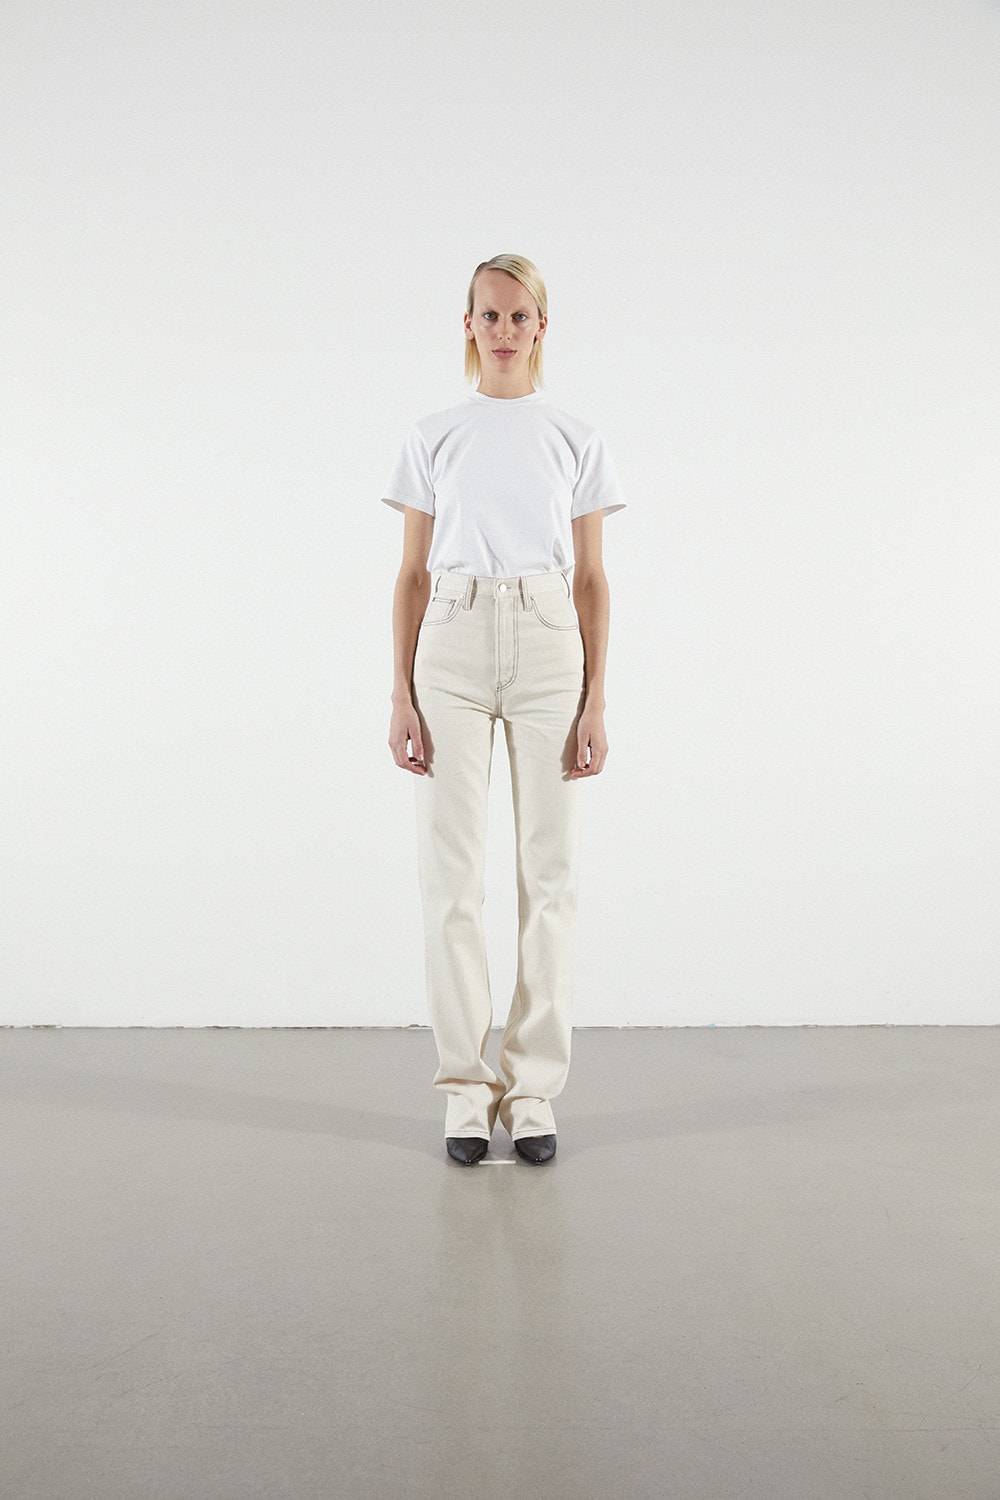 Helmut Lang Jeans Under Construction Capsule Lookbook T-shirt White Denim Cream